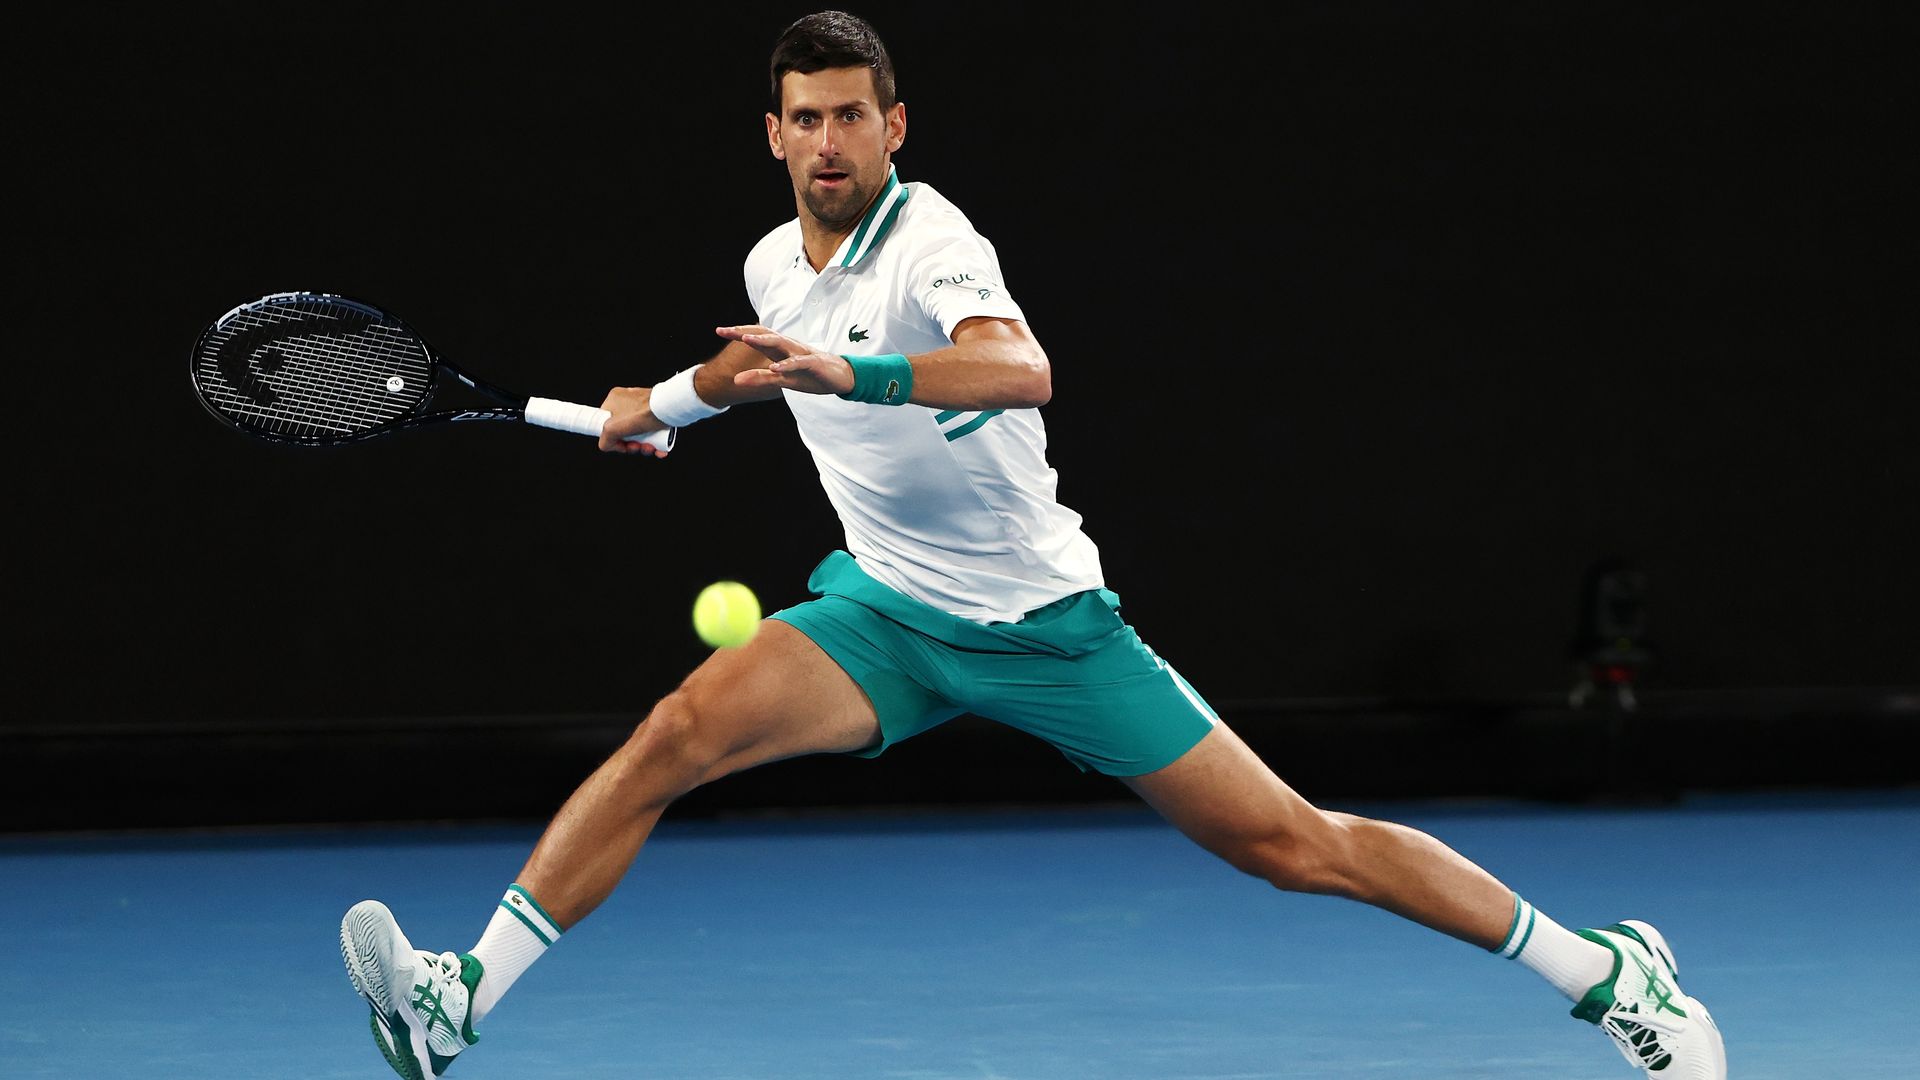 Novak Djokovic plays at the 2021 Australian Open.